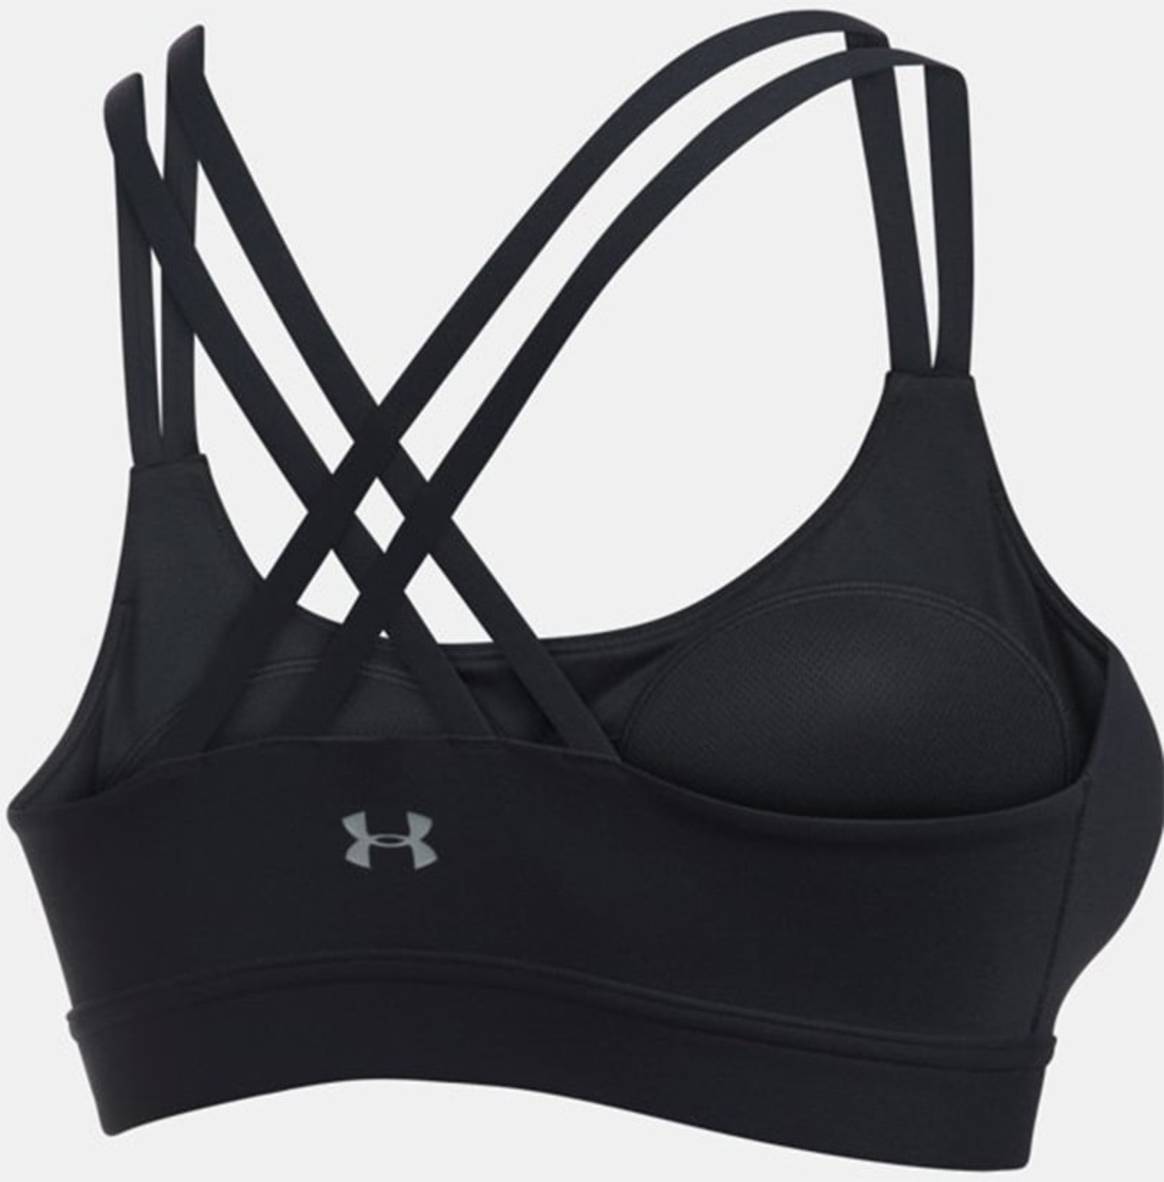 Battle of the Bra: Lululemon sues Under Armour over sports bra design